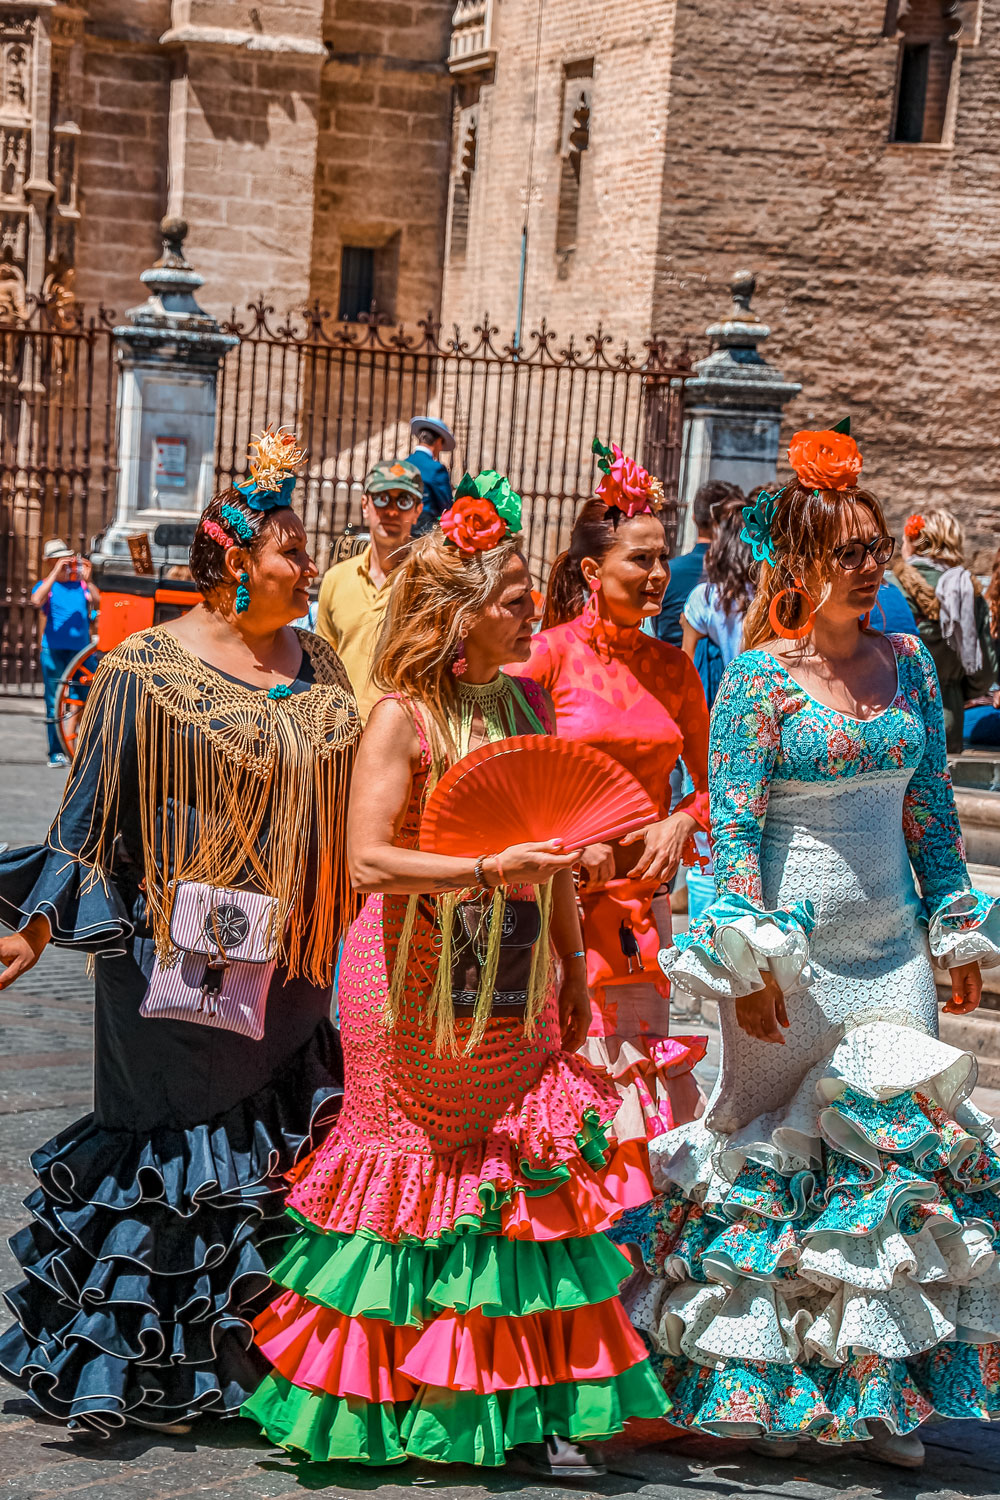 Flamenco dancers in Seville